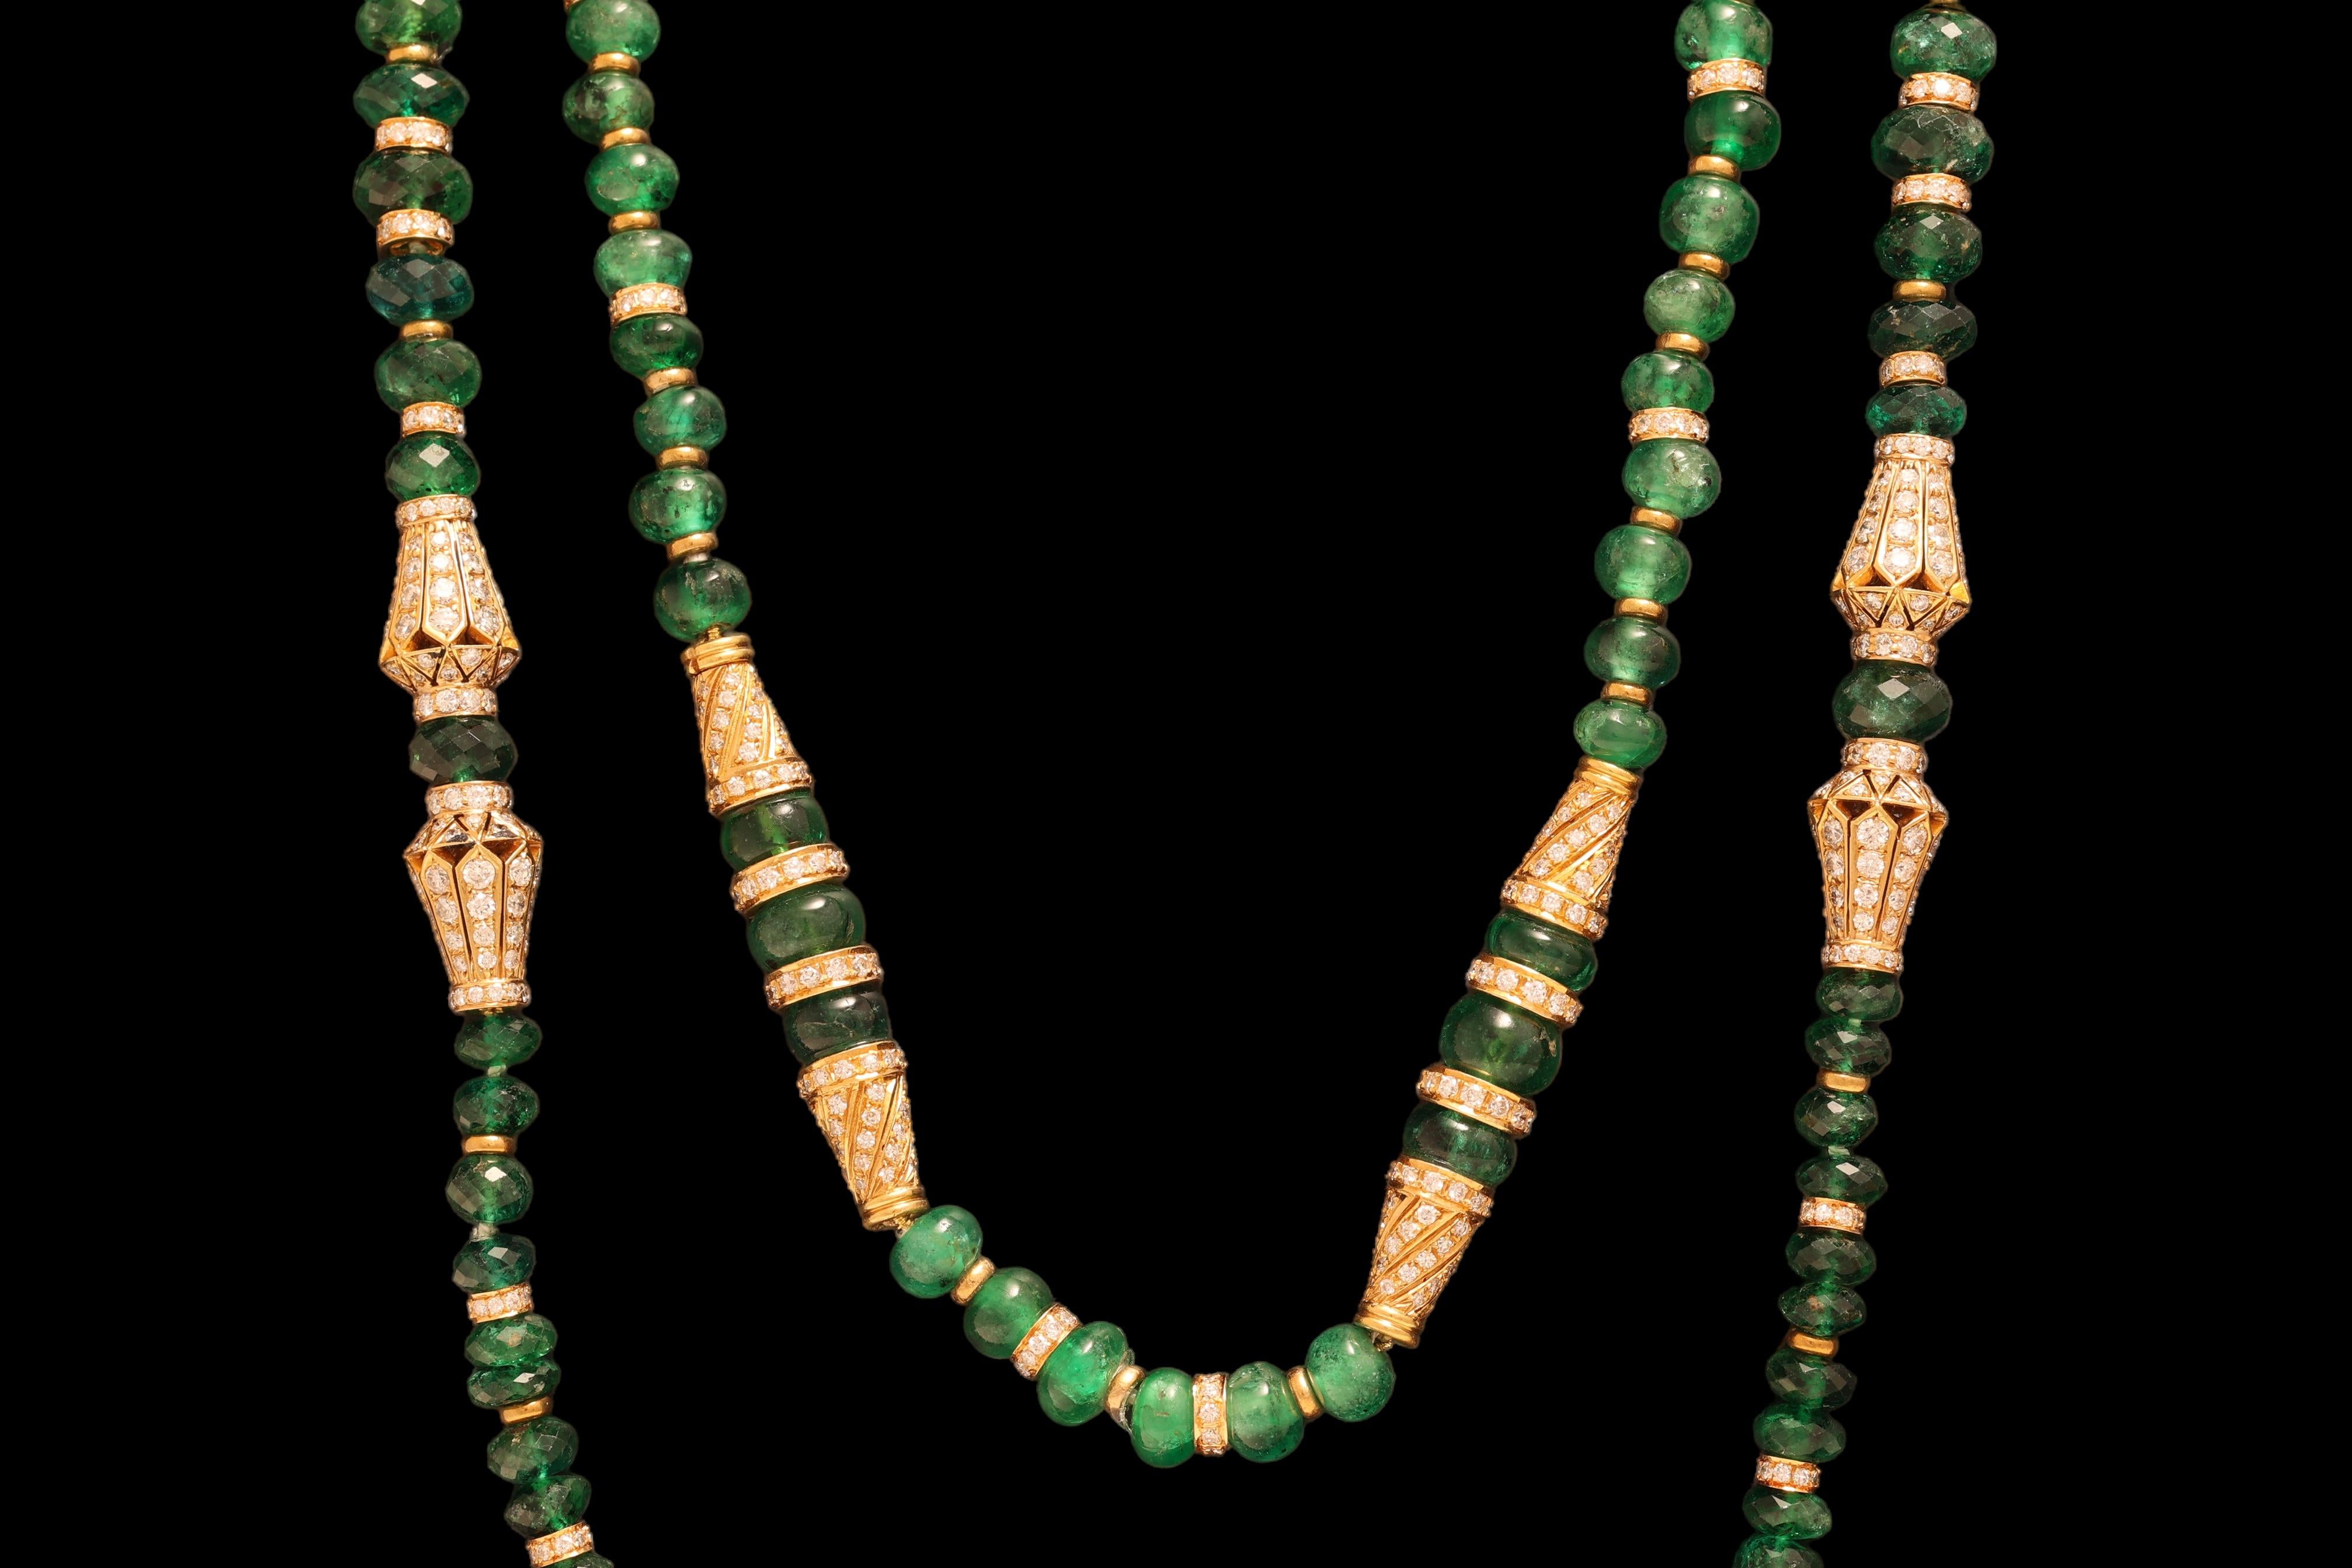 Adler Genèva 18kt Gold Necklaces 480ct Faceted Bead Emeralds CGL Certified For Sale 6